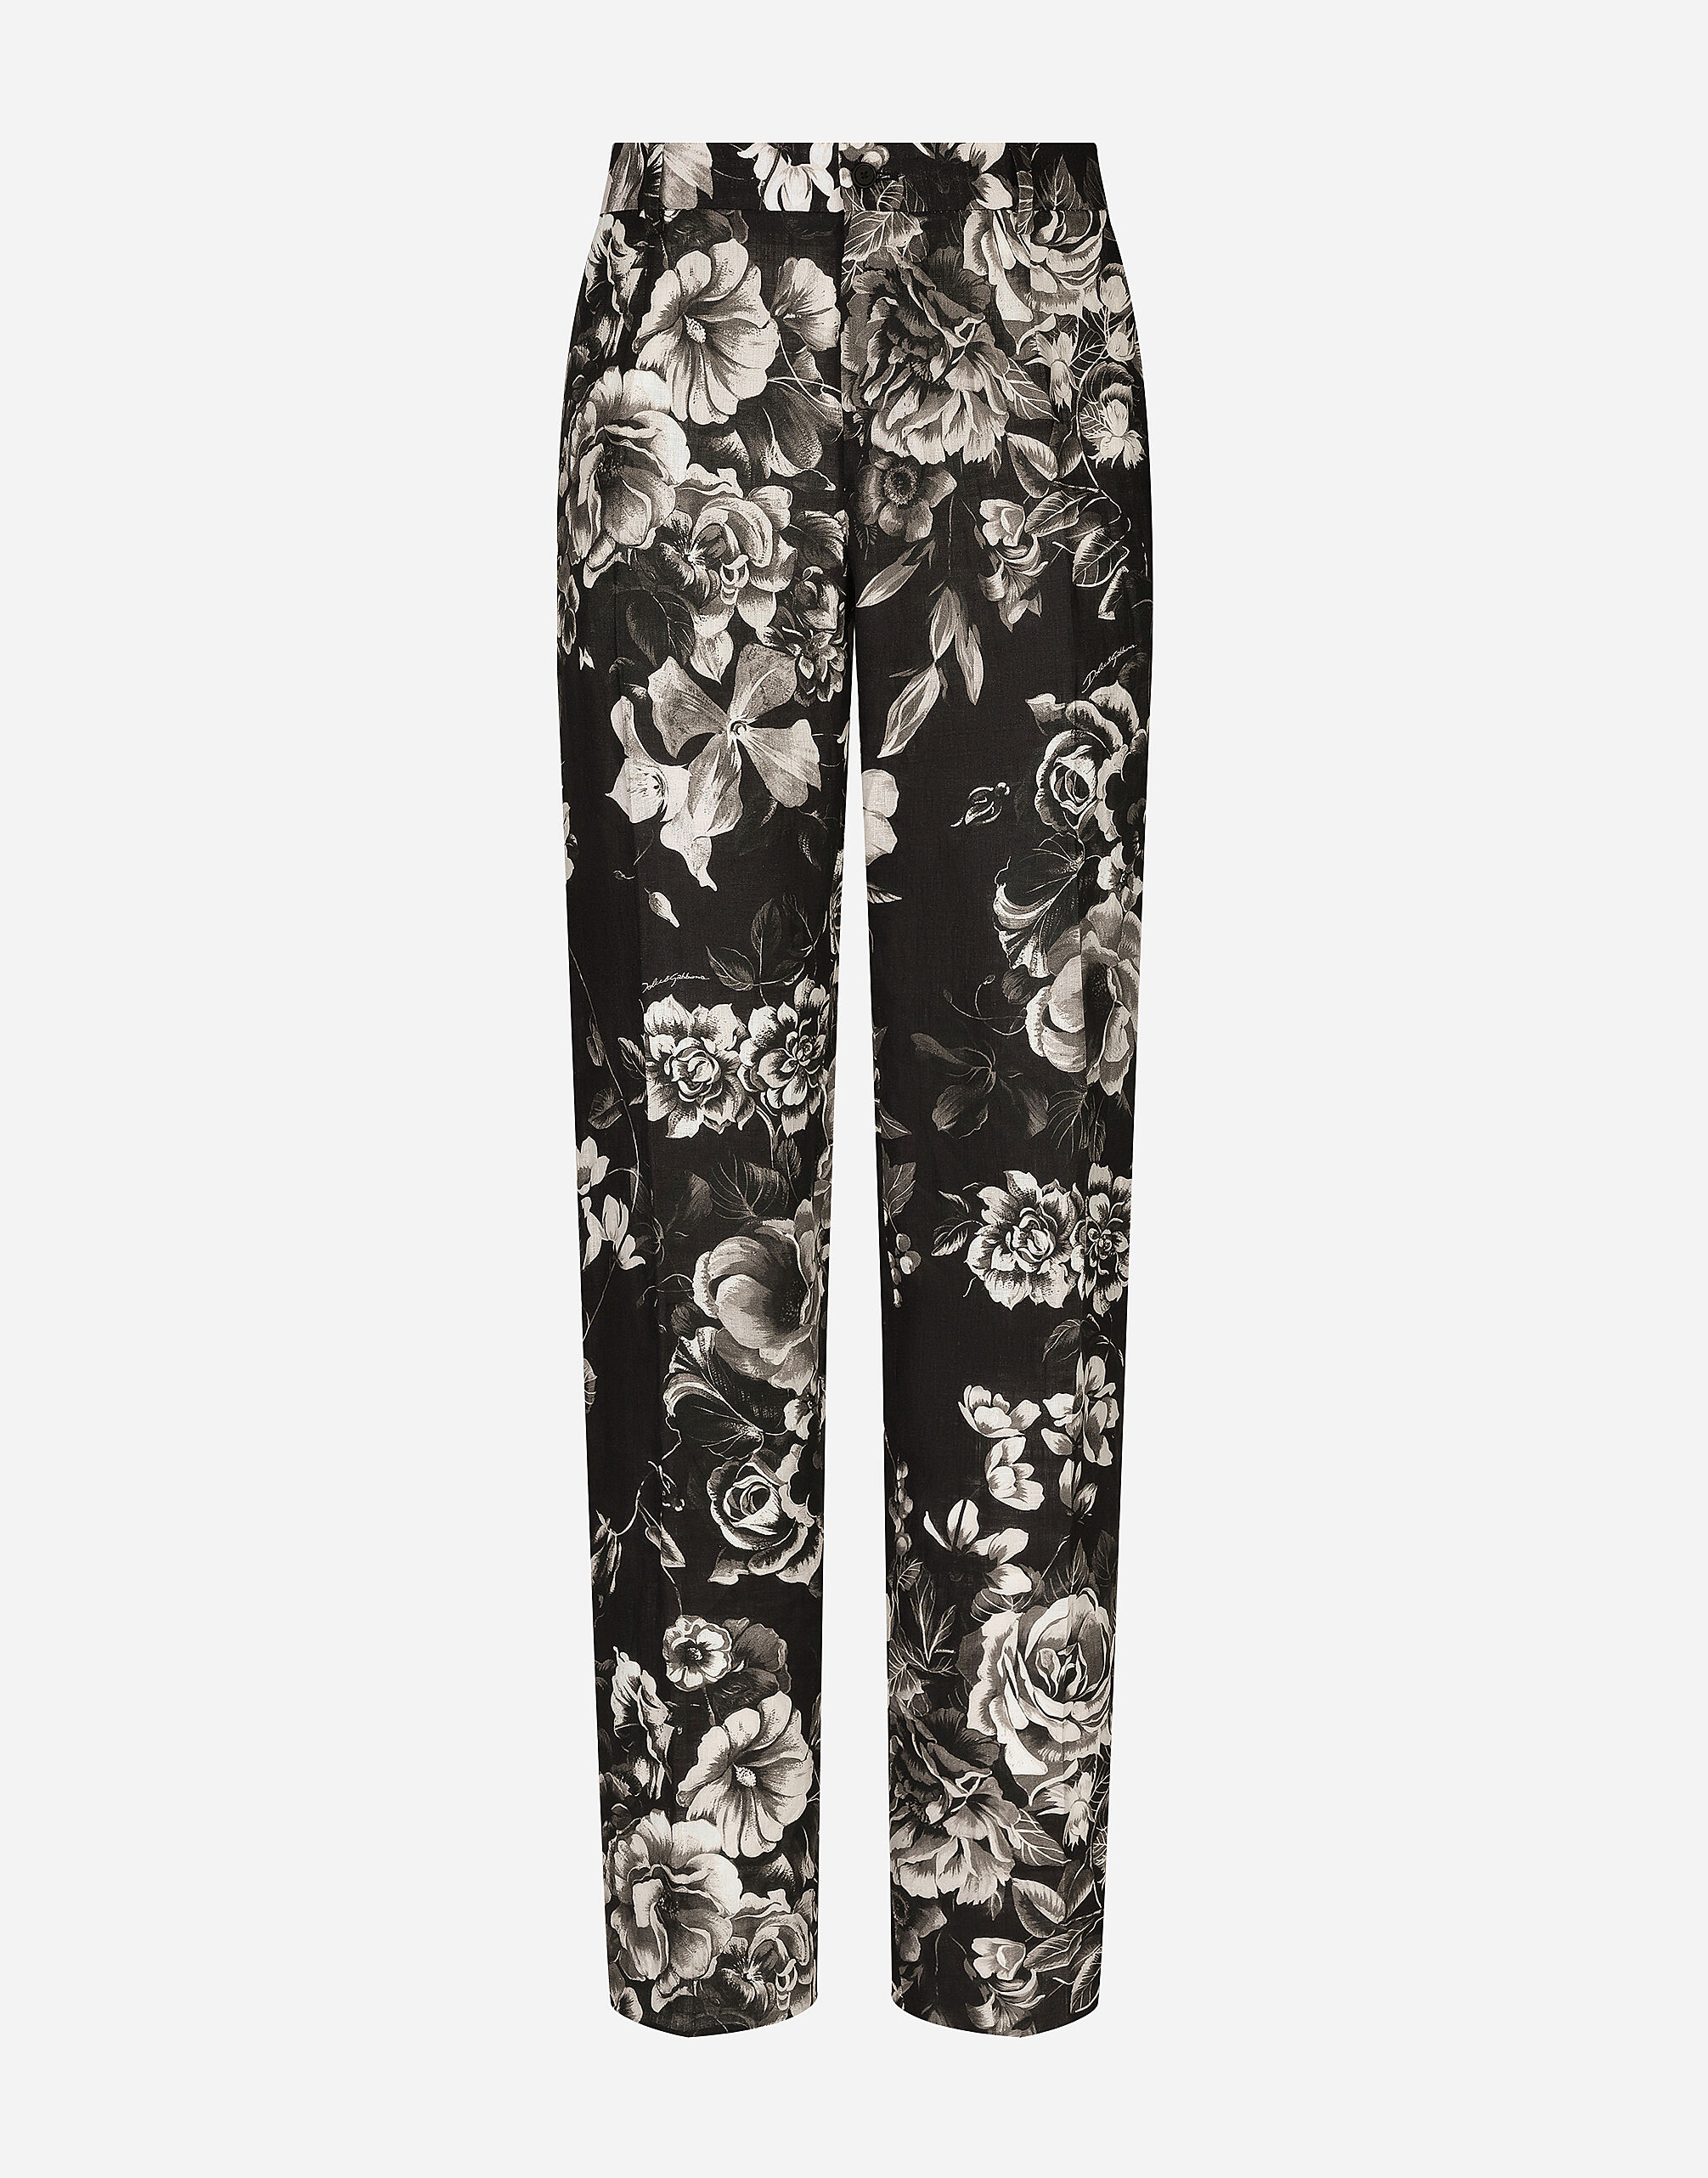 Dolce & Gabbana سروال كتان كلاسيكي بطبعة زهور متعدد الألوان GY6UETFR4BP